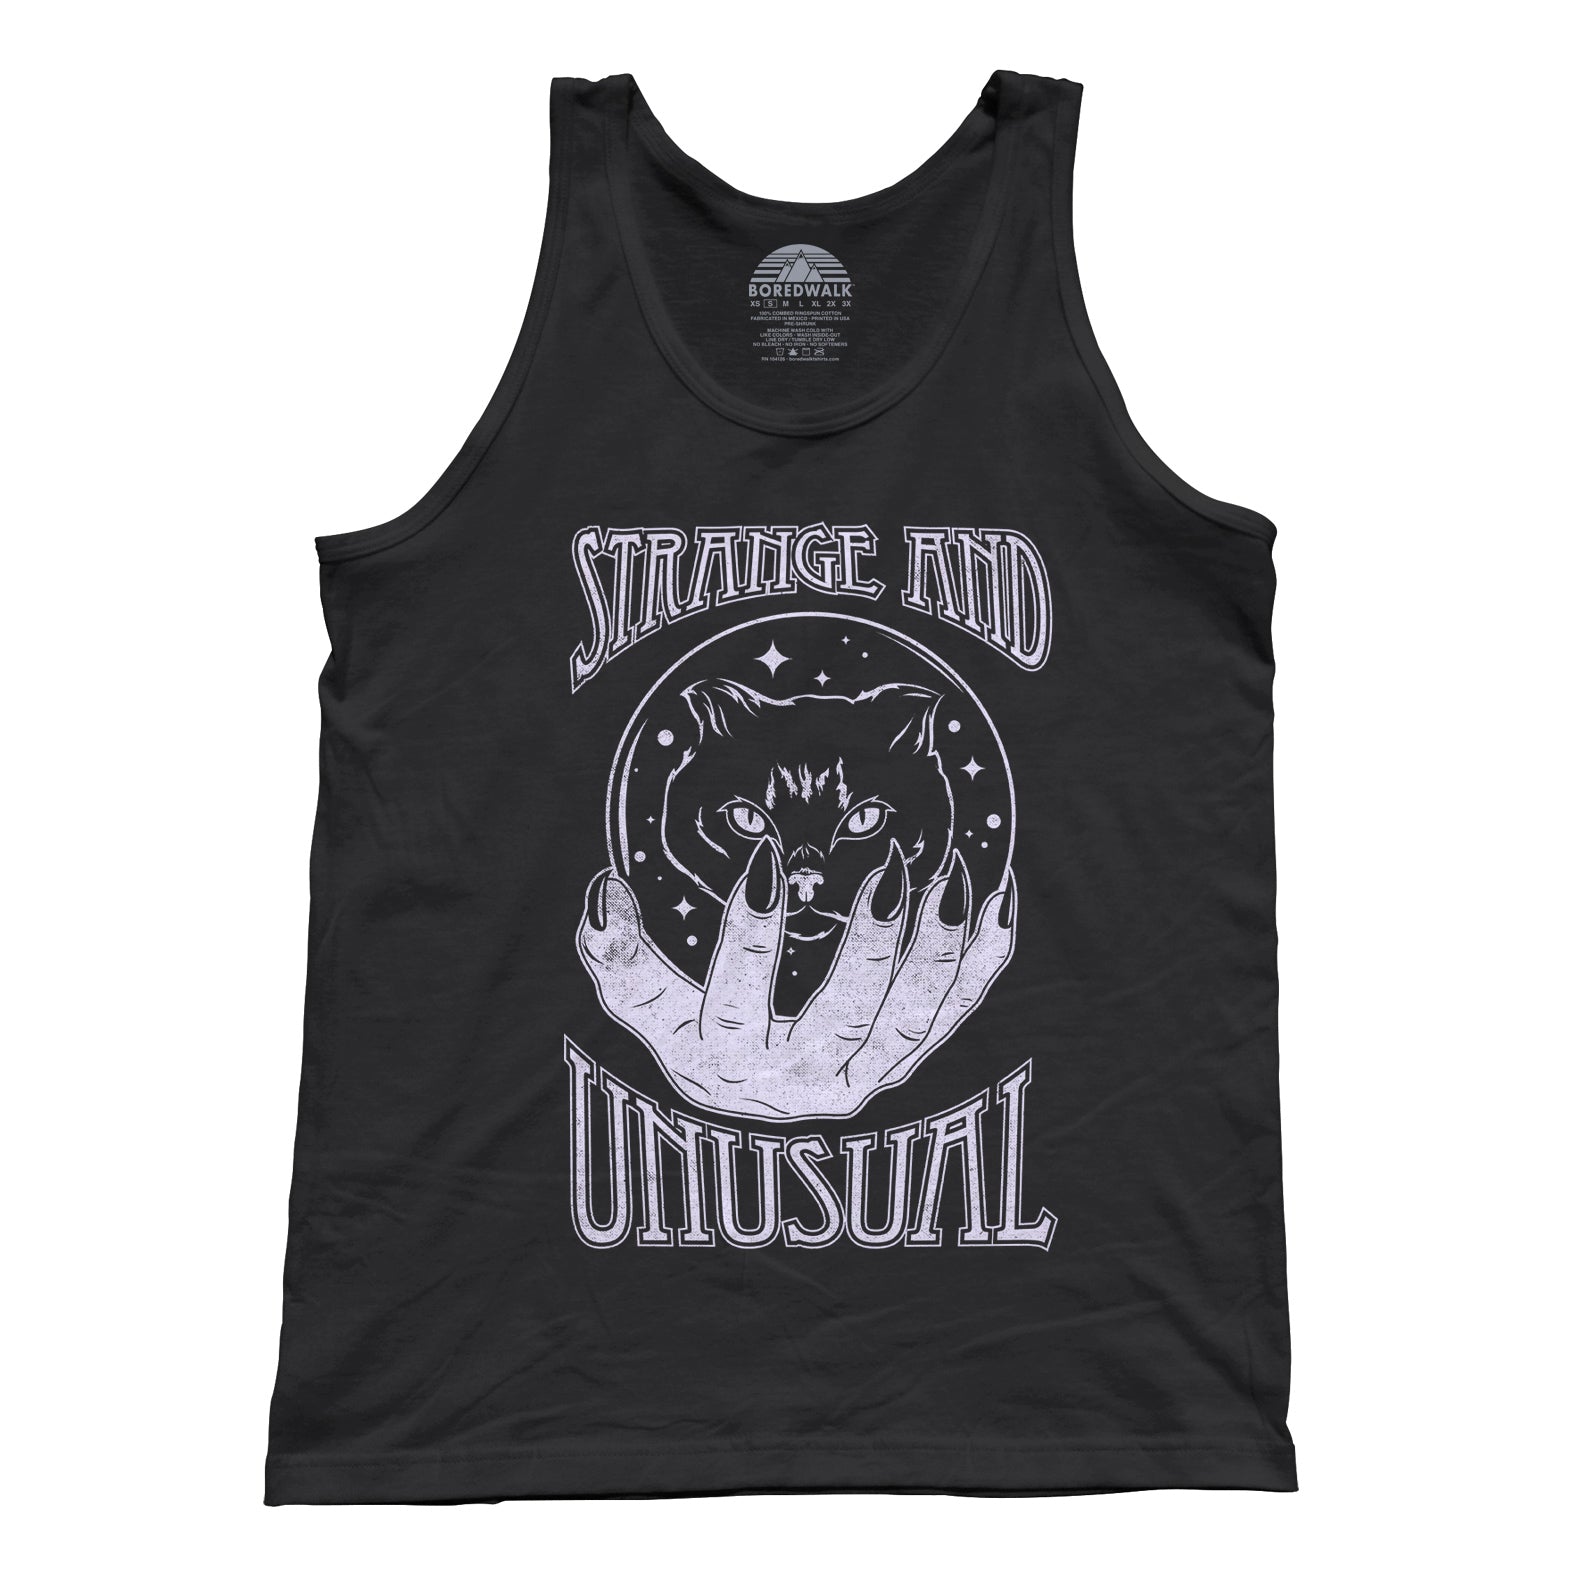 Unisex Strange and Unusual Tank Top - Occult shirt - Pastel Goth Shirt - Black Cat Shirt